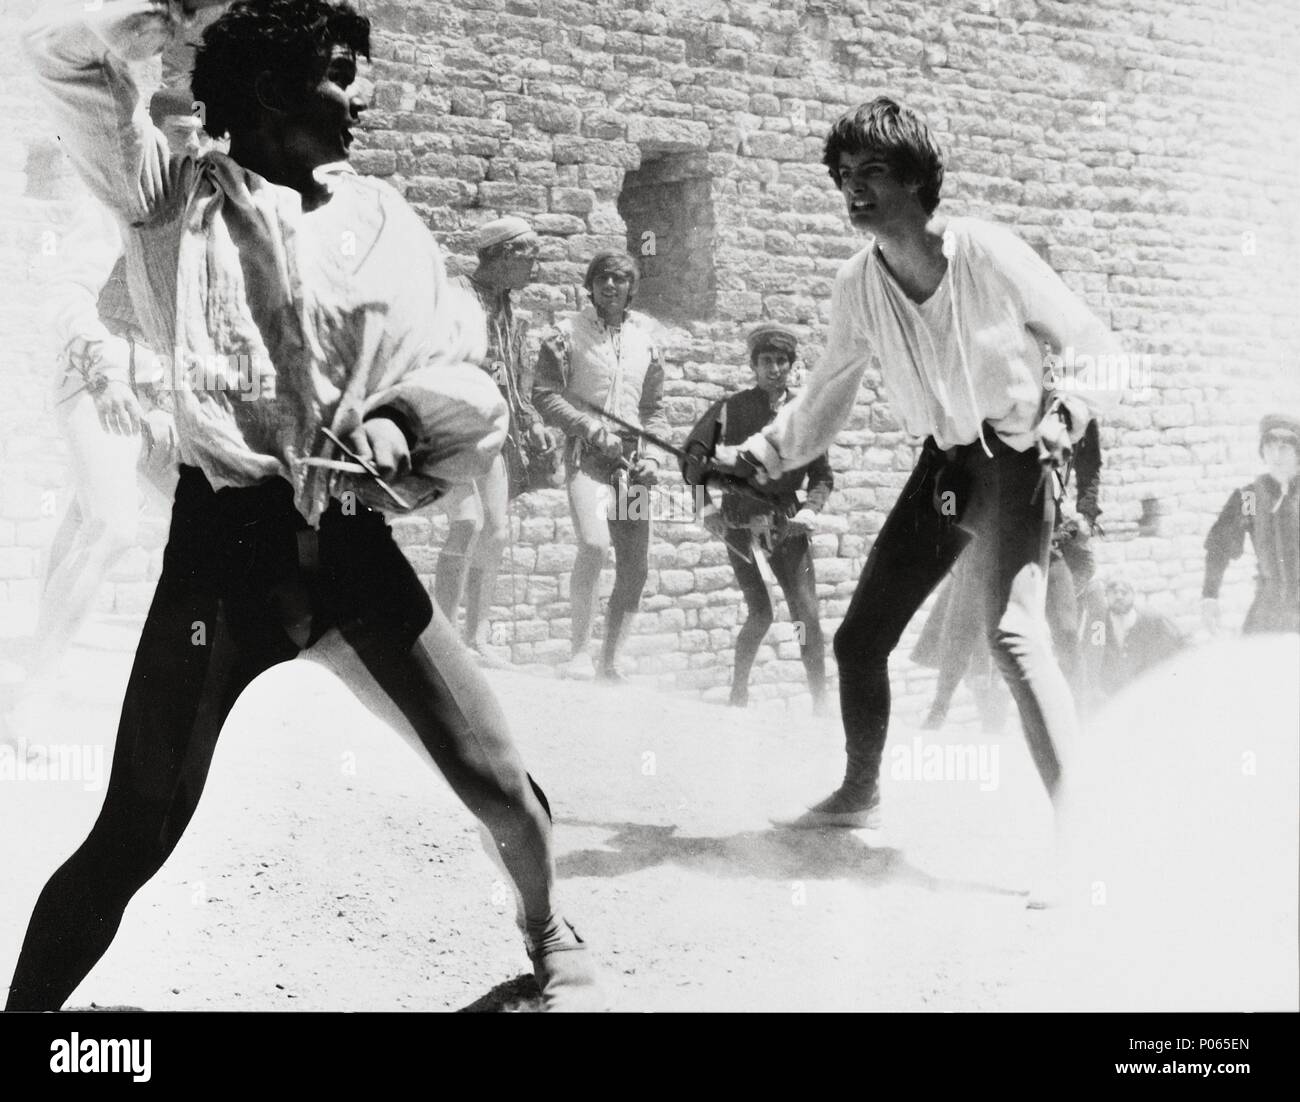 Original Film Title: ROMEO AND JULIET.  English Title: ROMEO AND JULIET.  Film Director: FRANCO ZEFFIRELLI.  Year: 1968.  Stars: LEONARD WHITING. Credit: PARAMOUNT PICTURES / Album Stock Photo